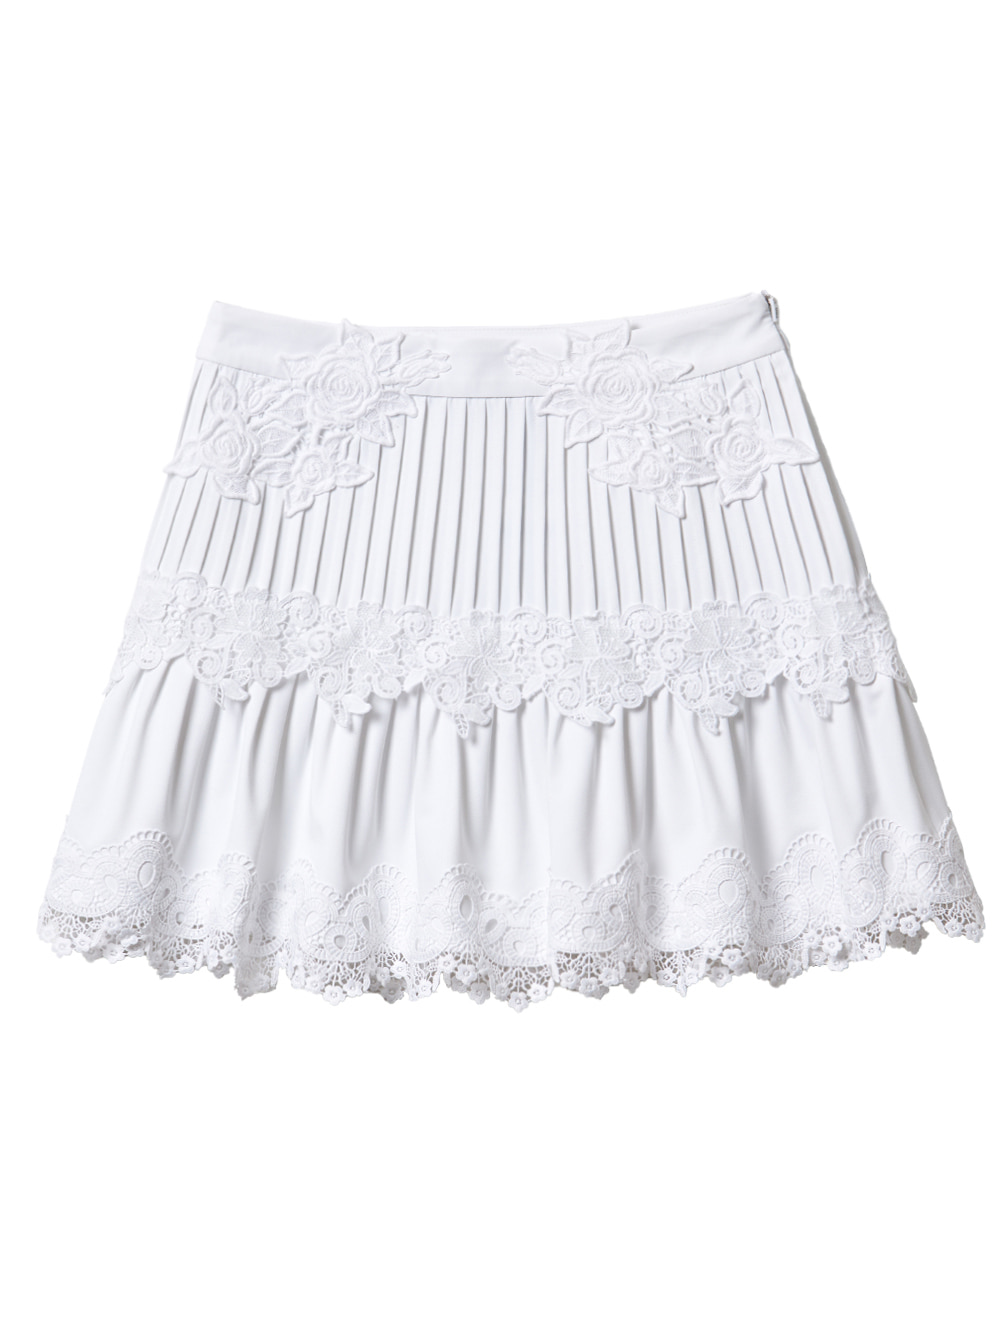 UTAA Lace Mix Half Pleats Skirt : White (UA3SKF751WH)